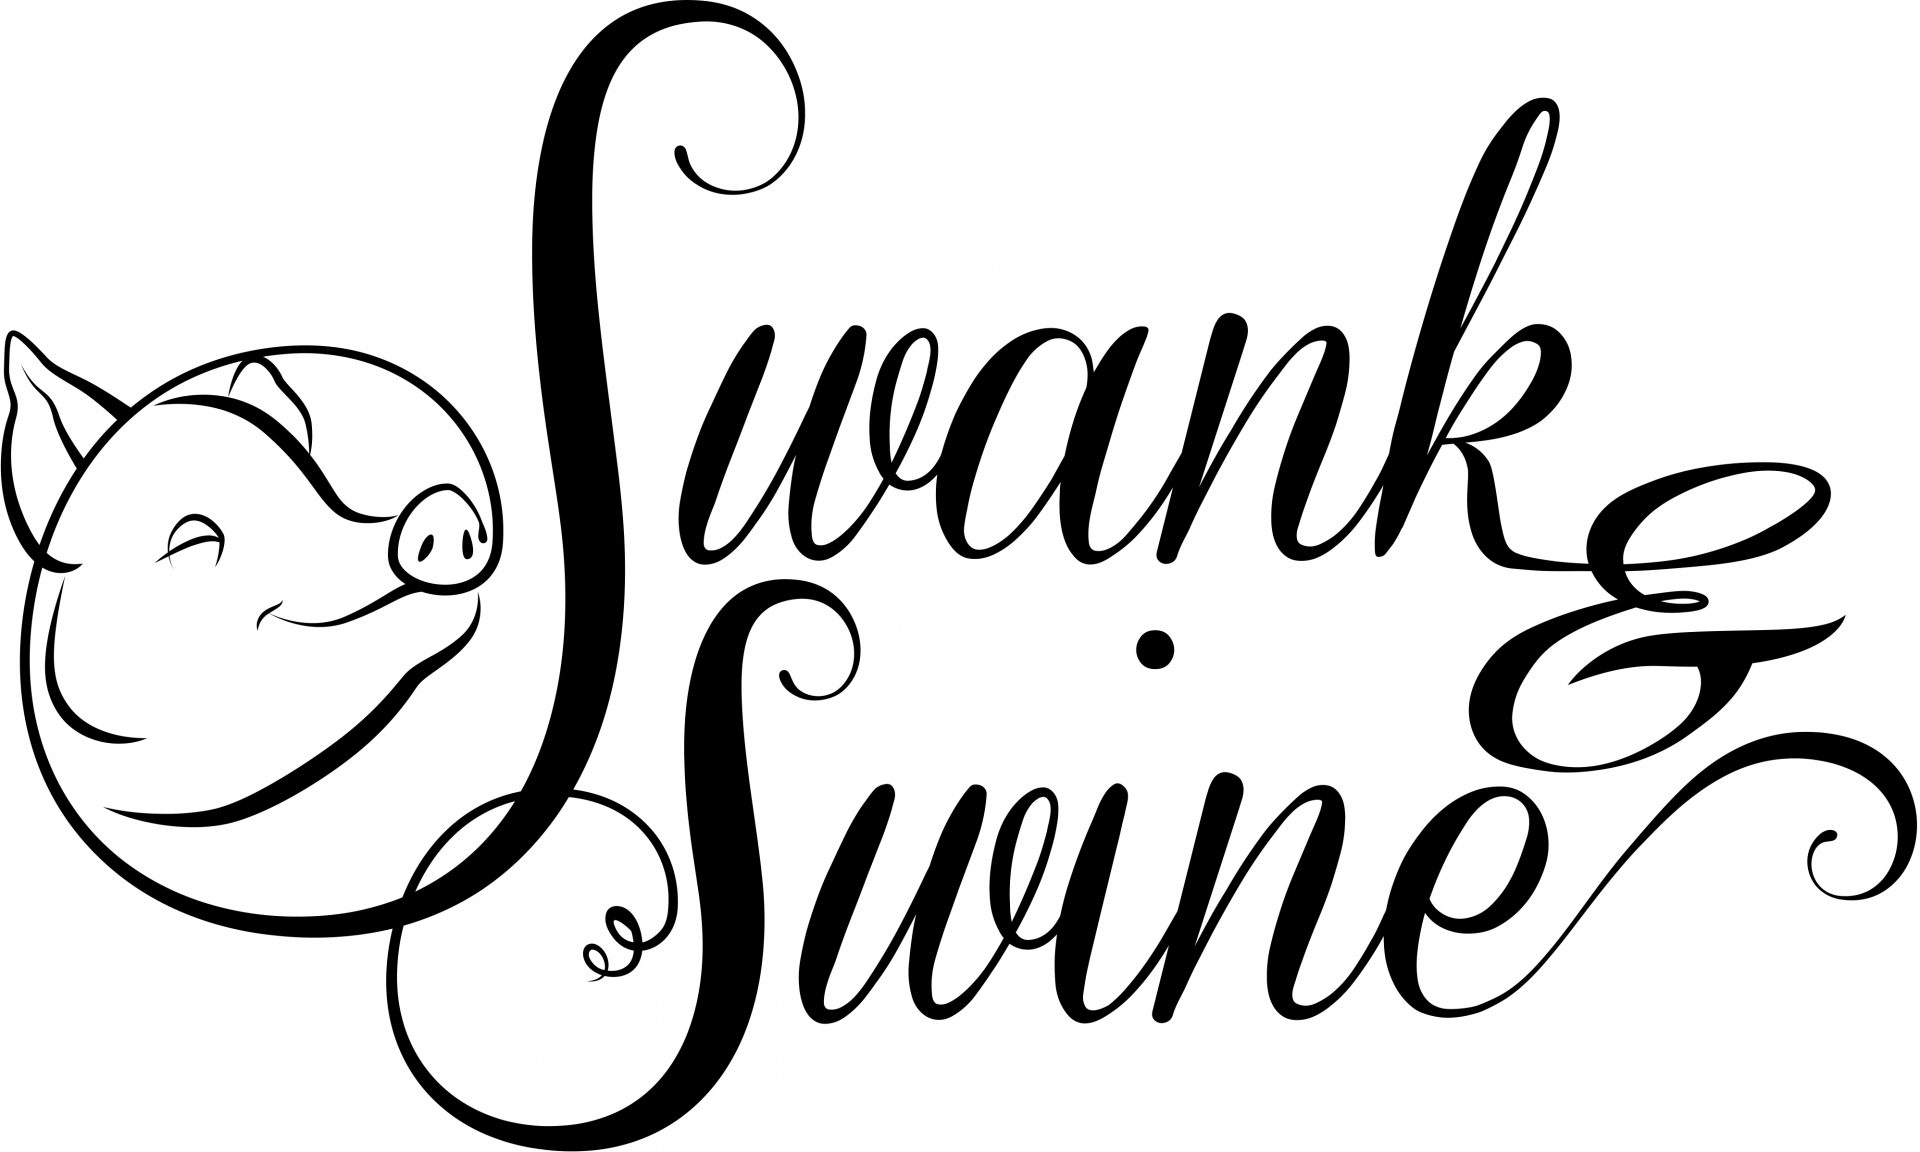 Swank & Swine Logo Concept